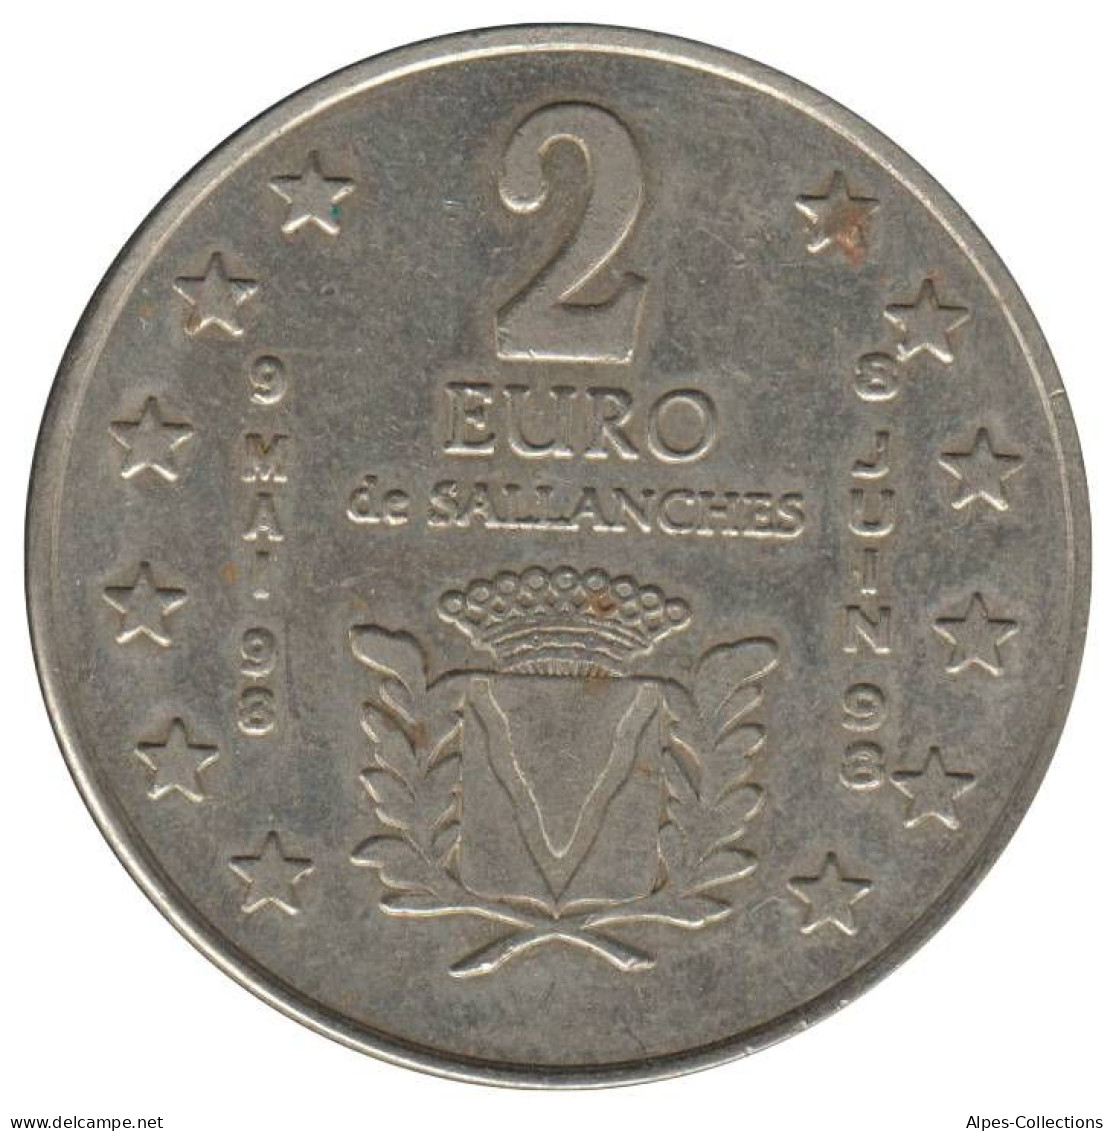 SALLANCHES - EU0020.1 - 2 EURO DES VILLES - Réf: NR - 1998 - Euro Der Städte